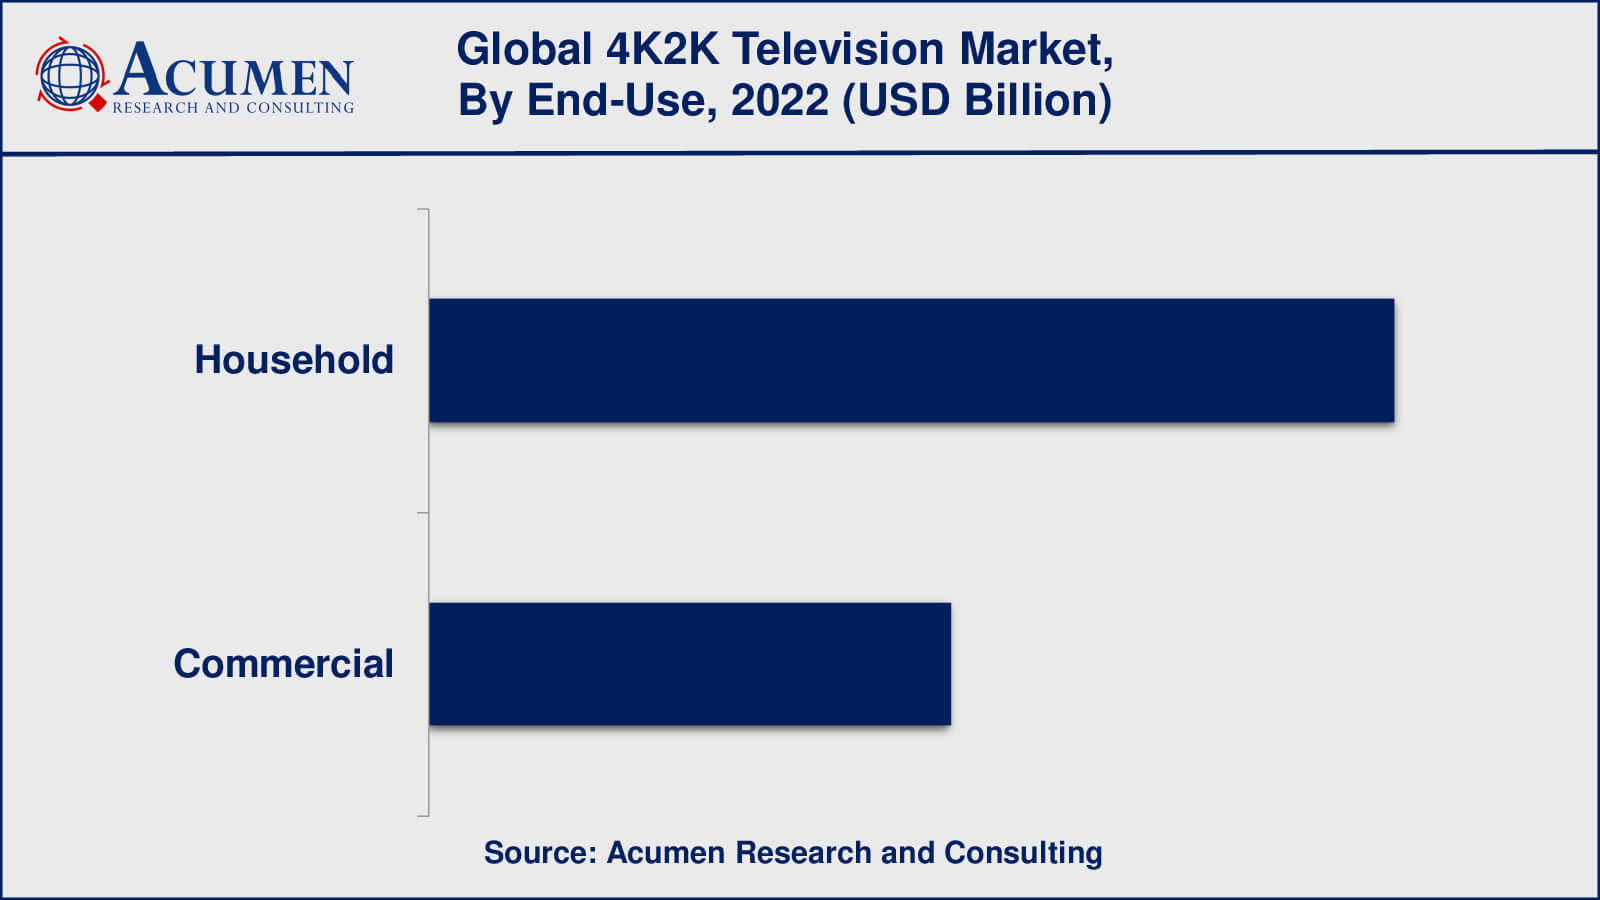 4K2K Television Market Growth Factors